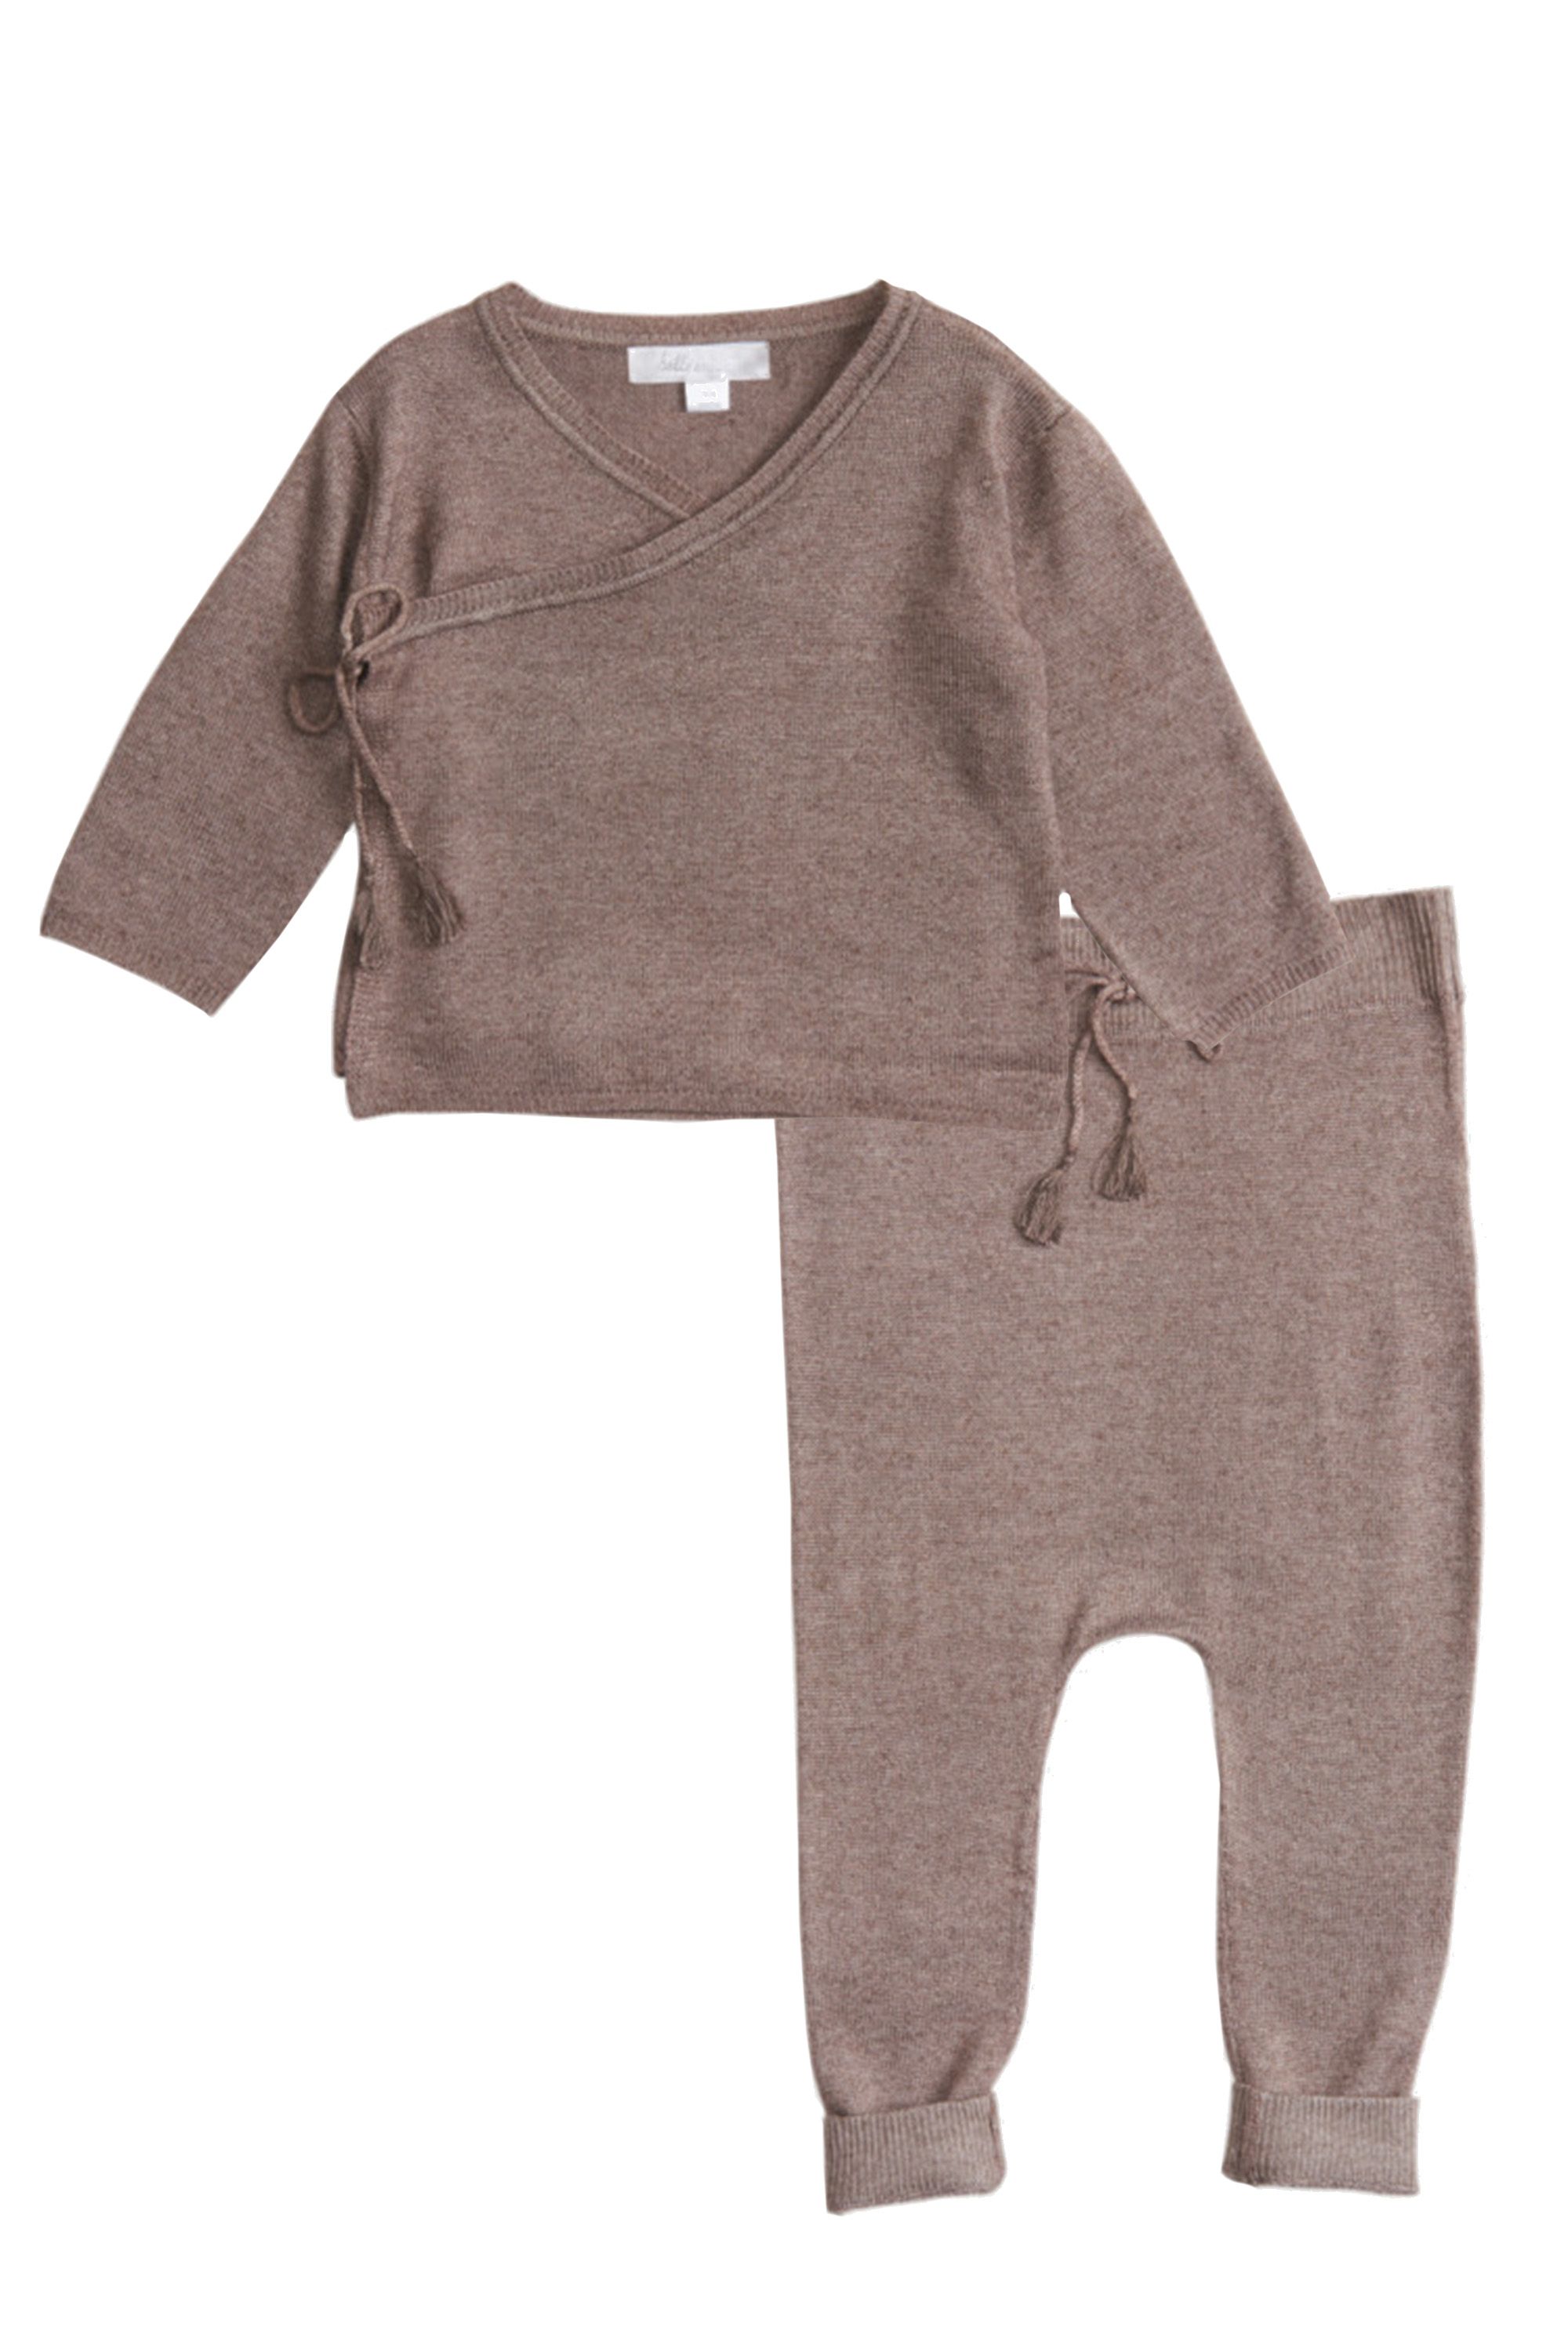 designer baby sleepsuits